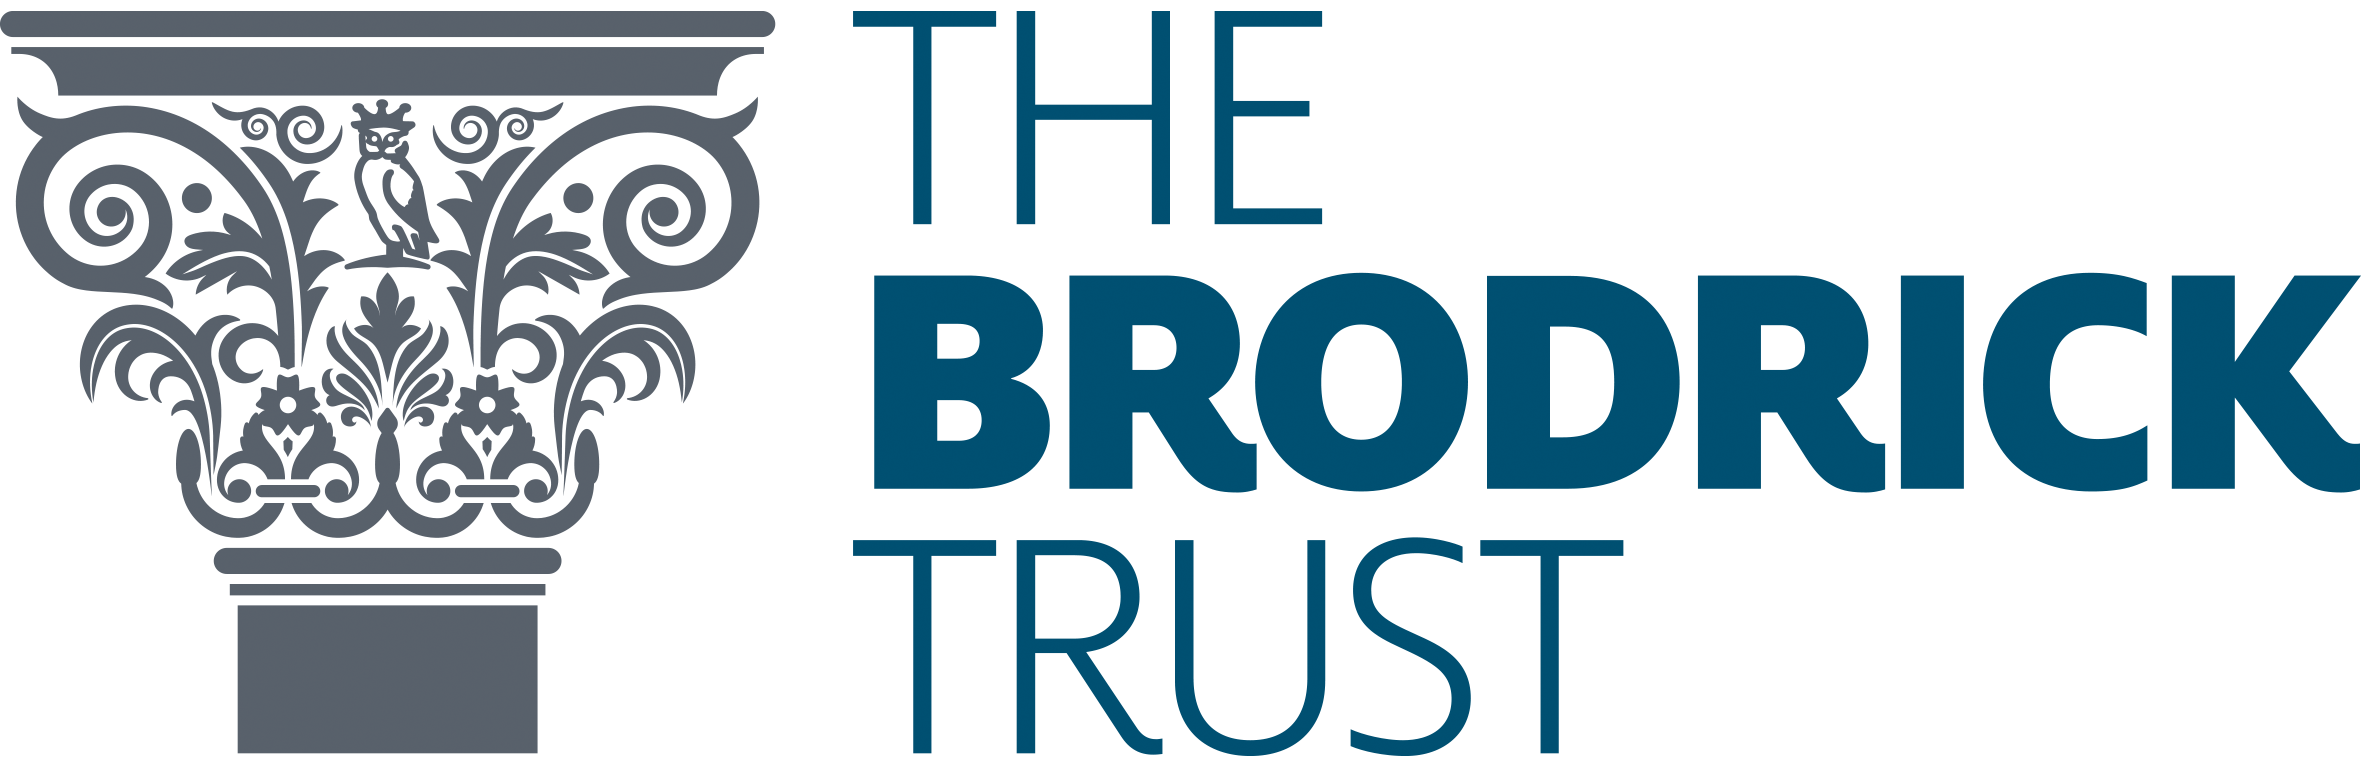 Brodrick Trust logo